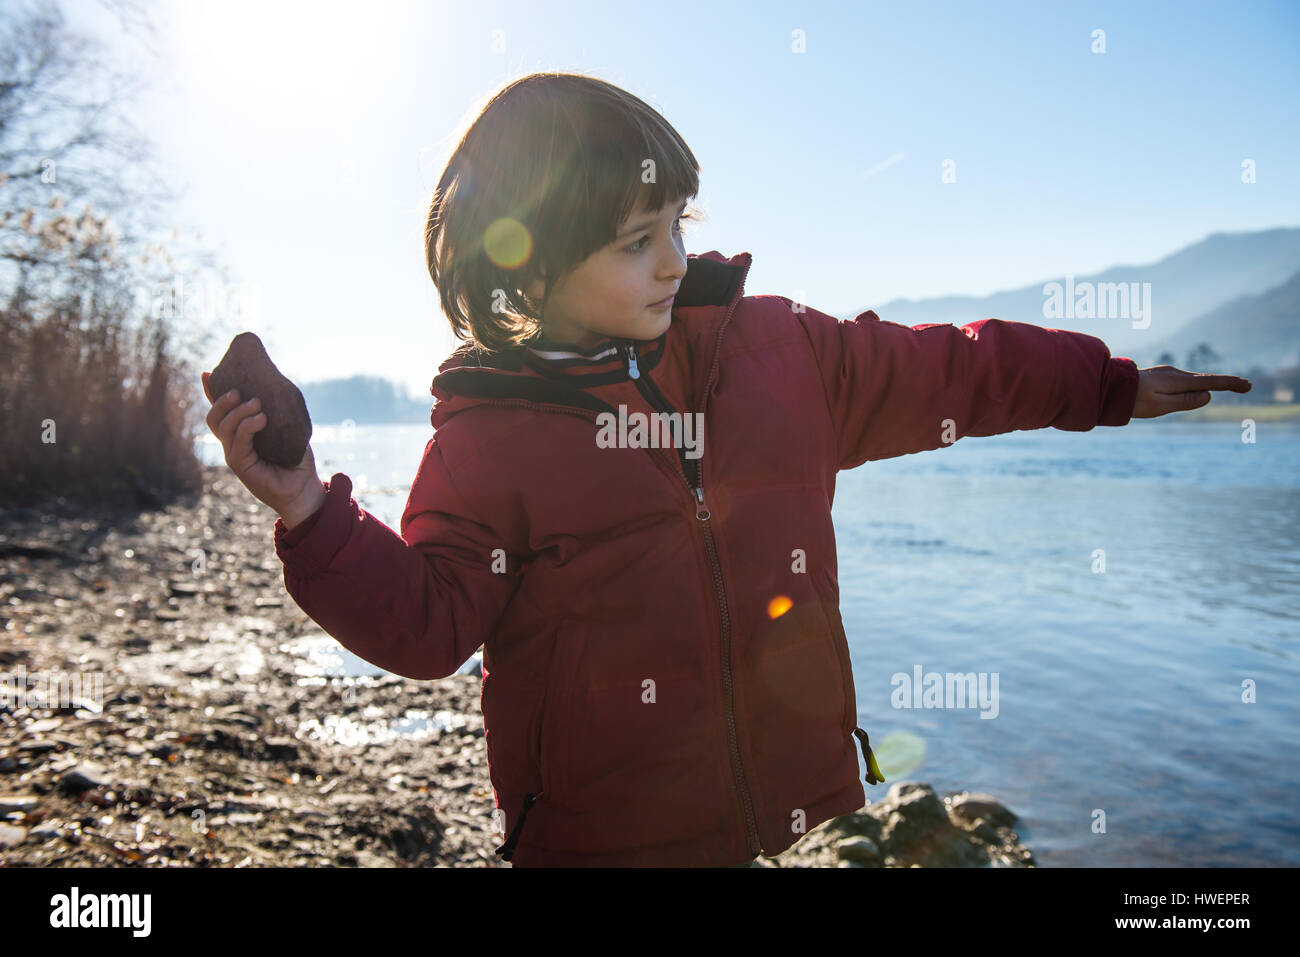 Young boy beside lake, throwing stone into lake Stock Photo